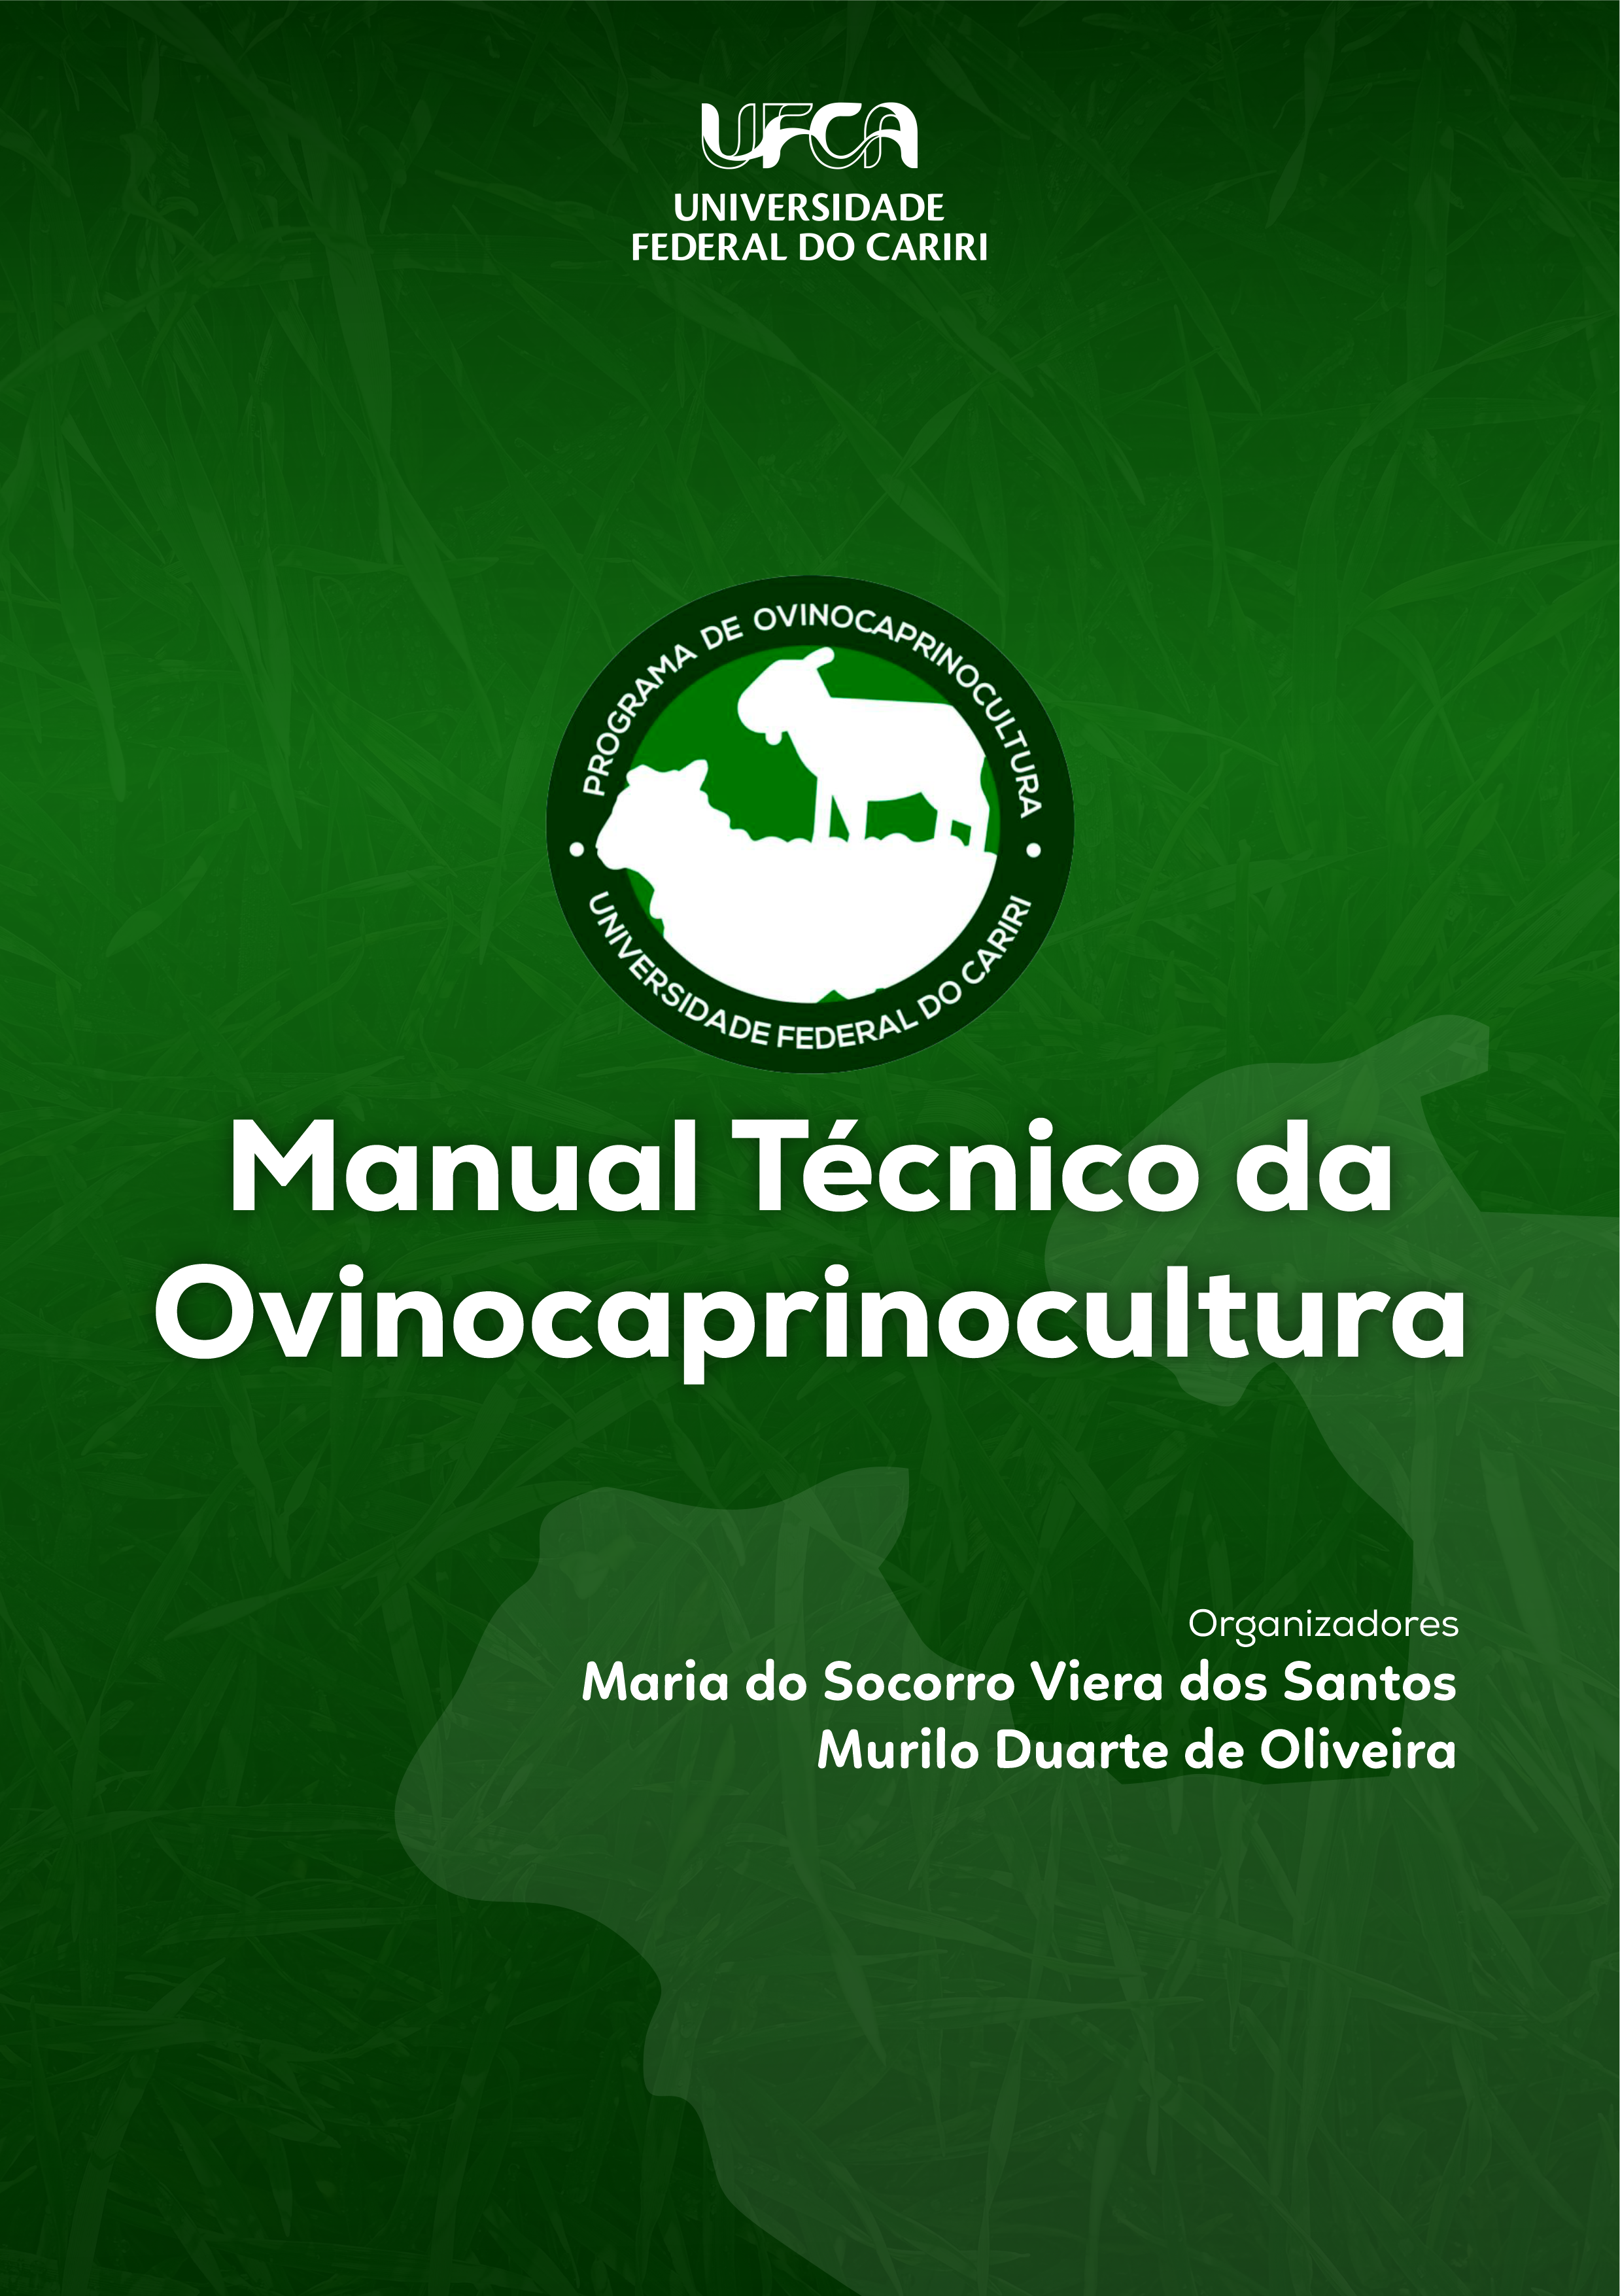 Manual técnico da ovinocaprinocultura thumbnail